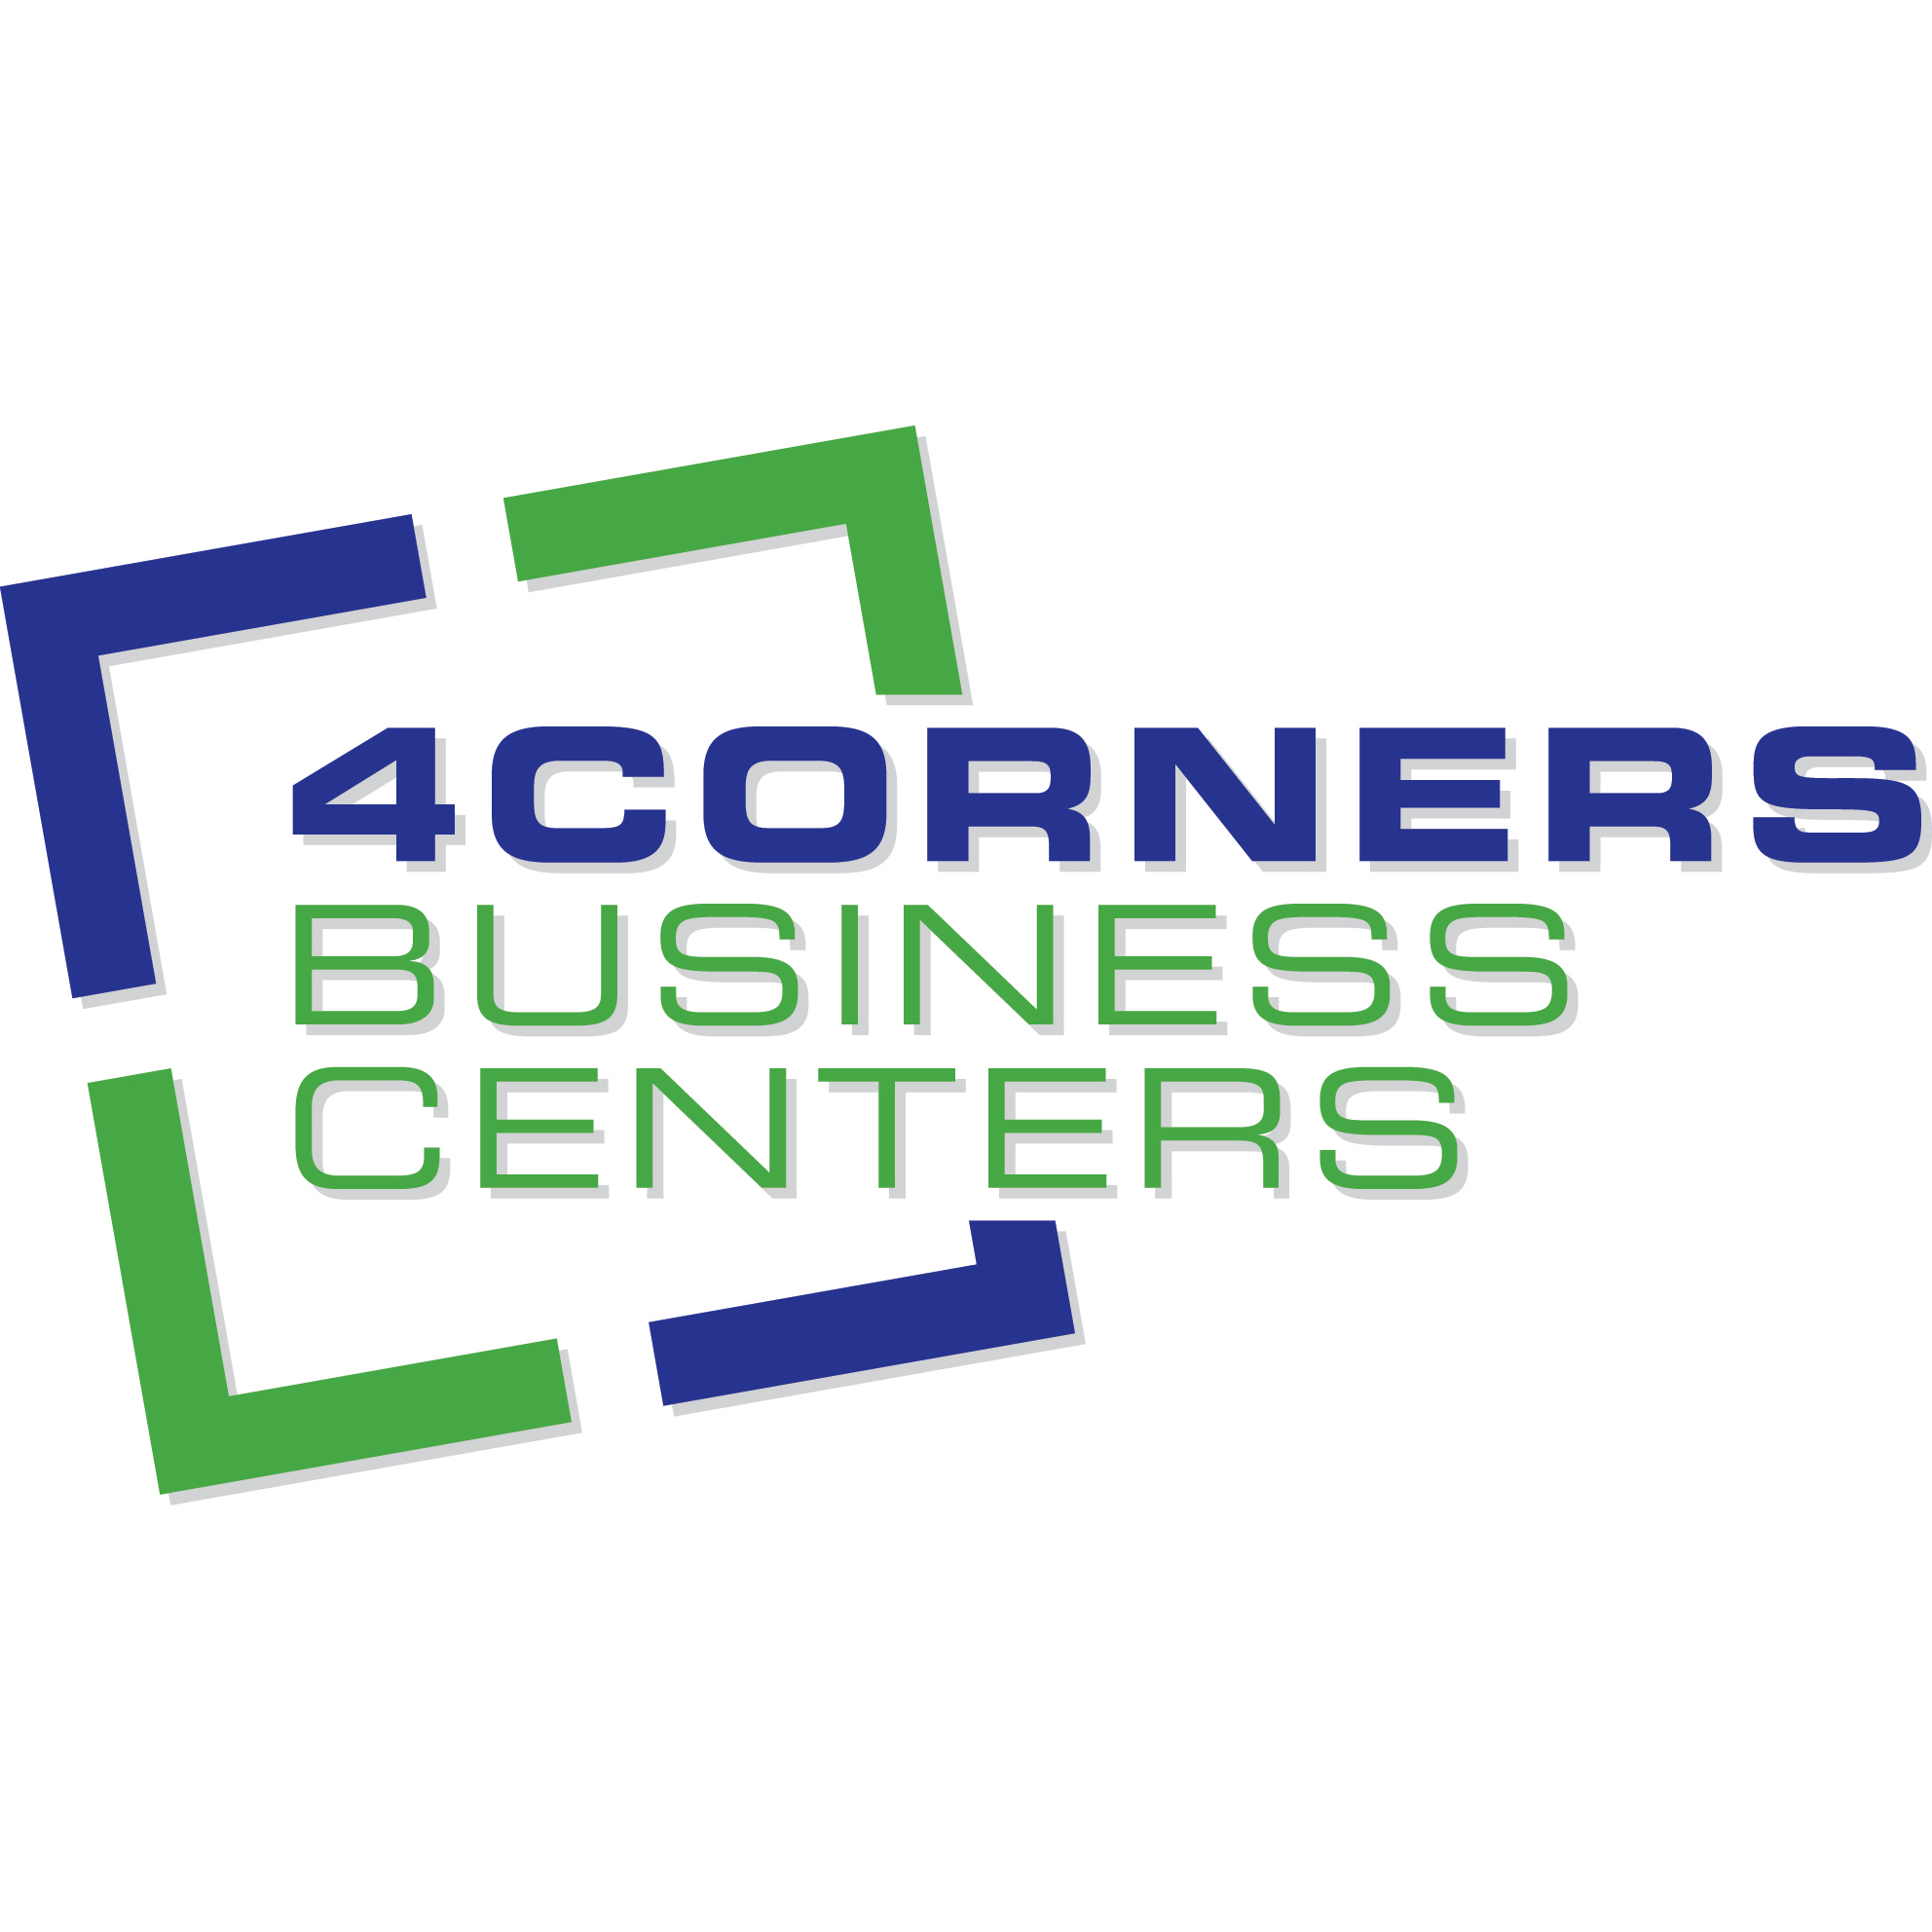 4Corners Business Centers Brooklyn (718)280-5170